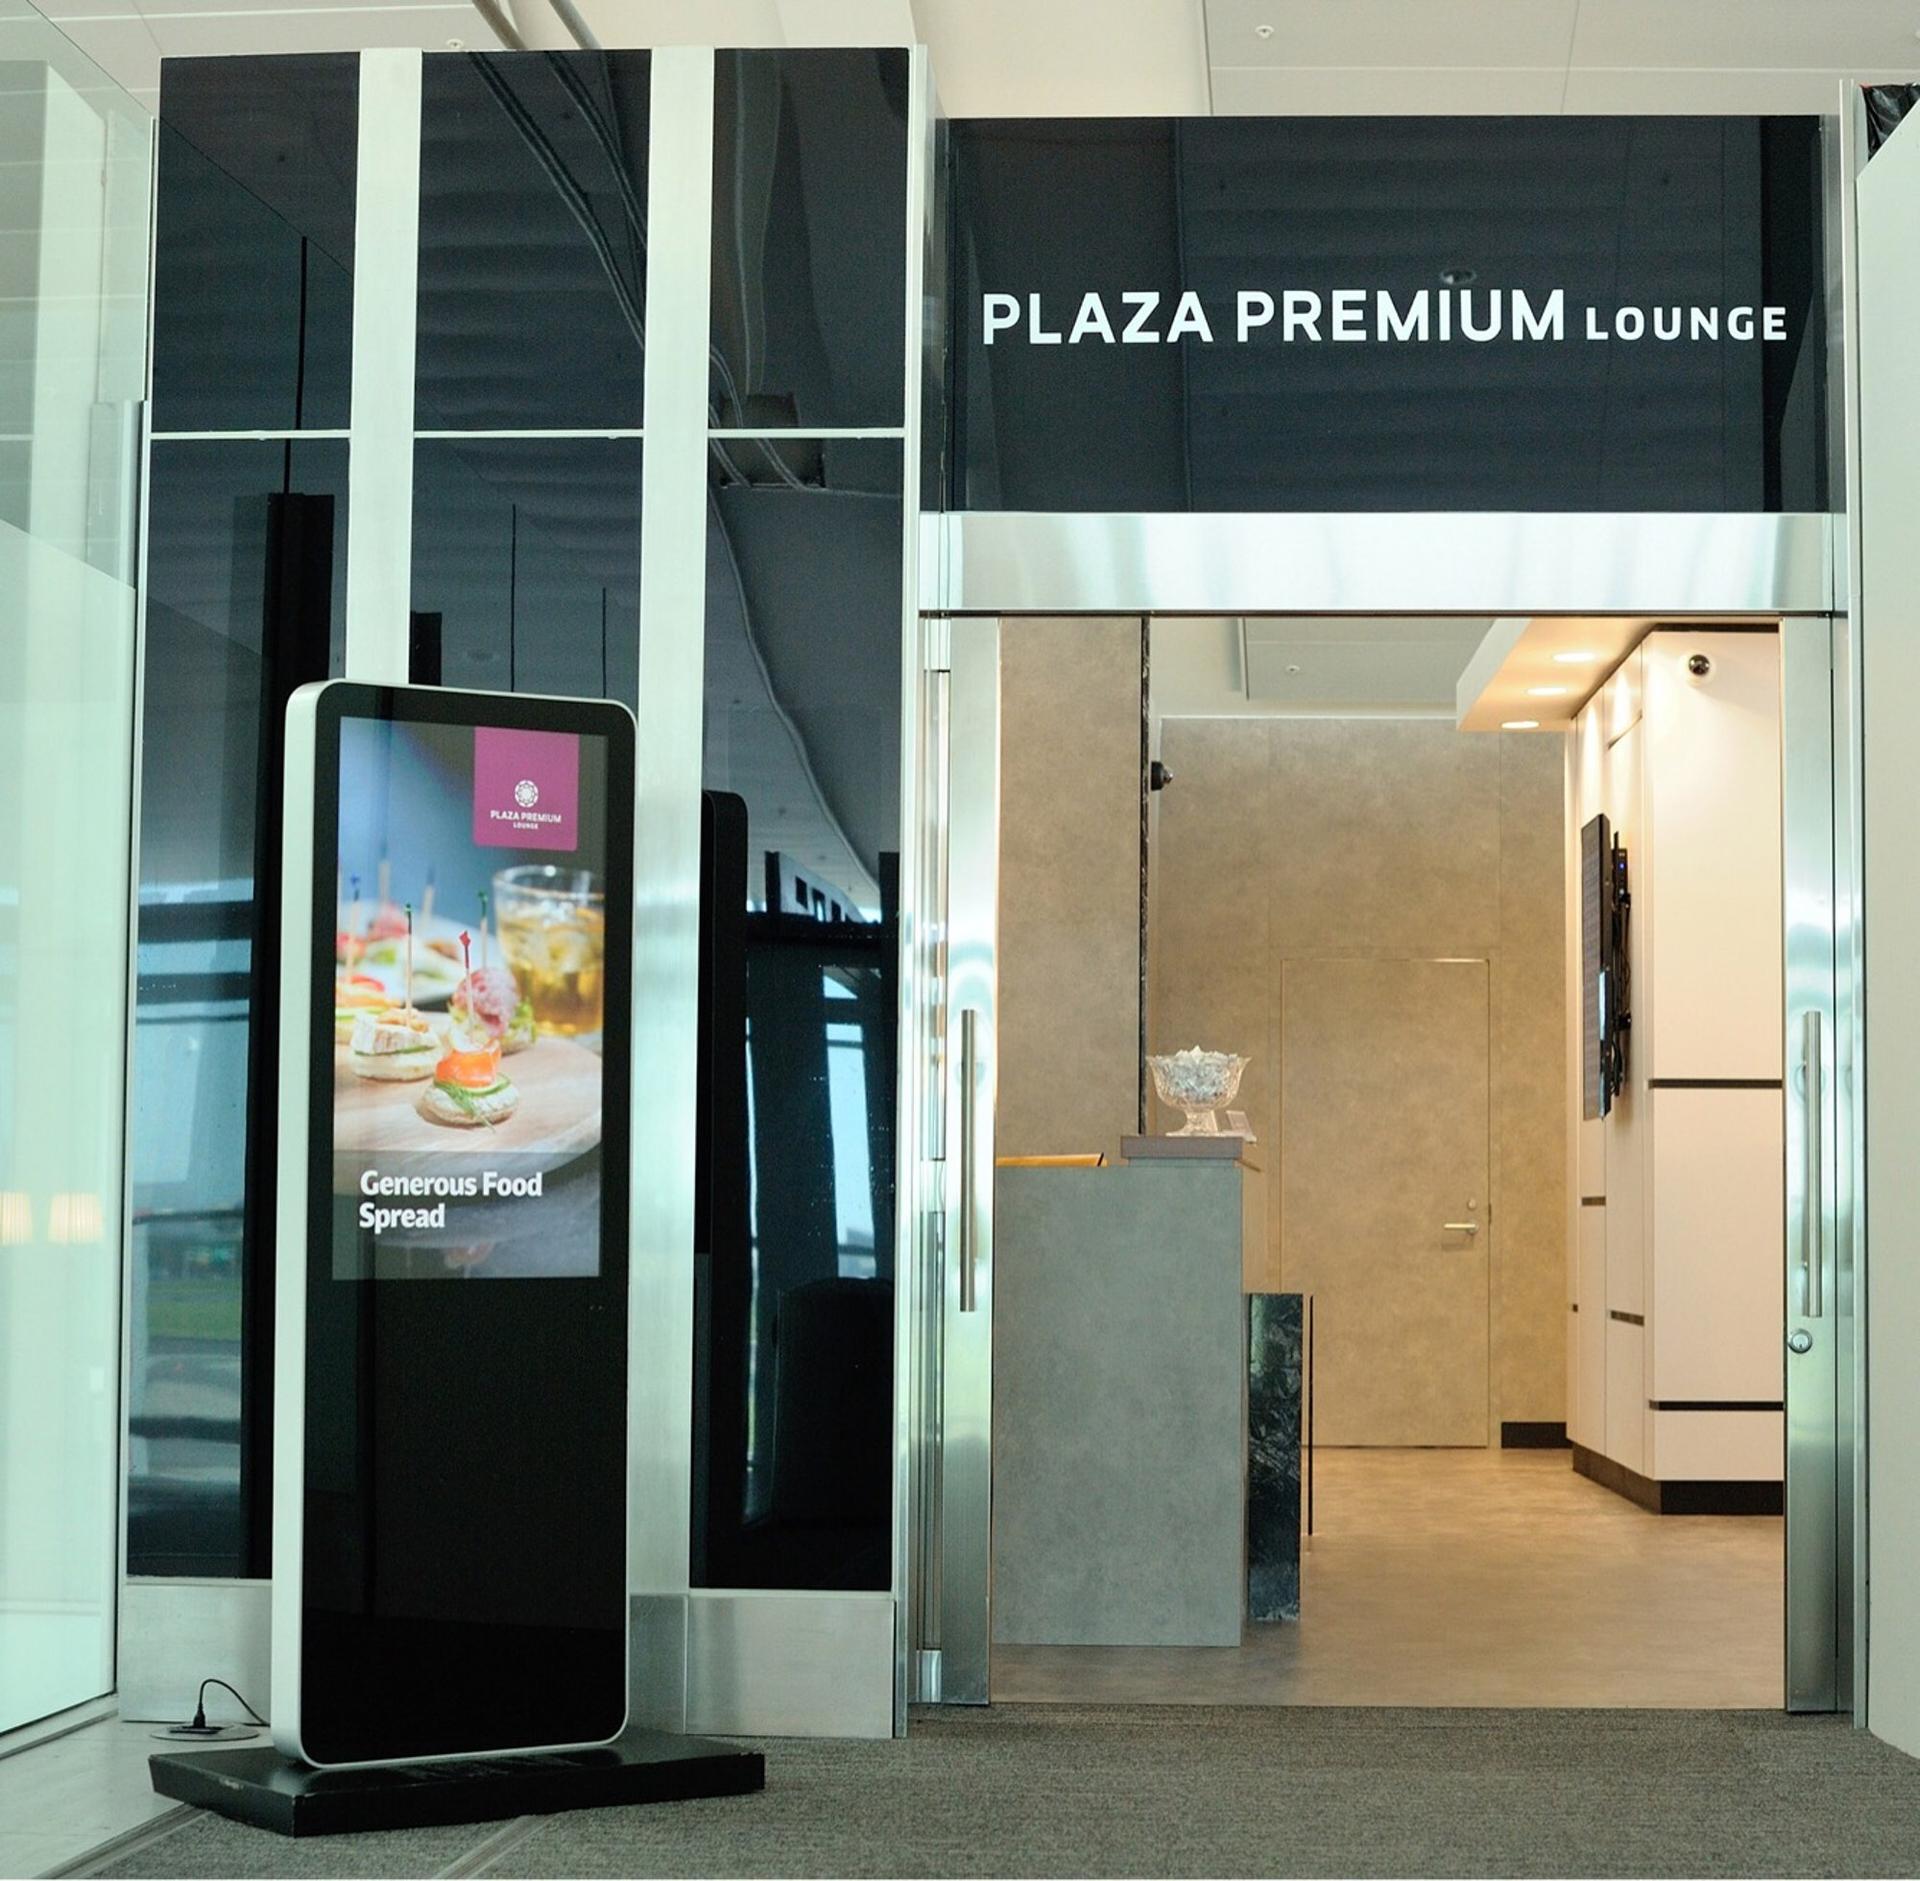 Plaza Premium Lounge image 5 of 40